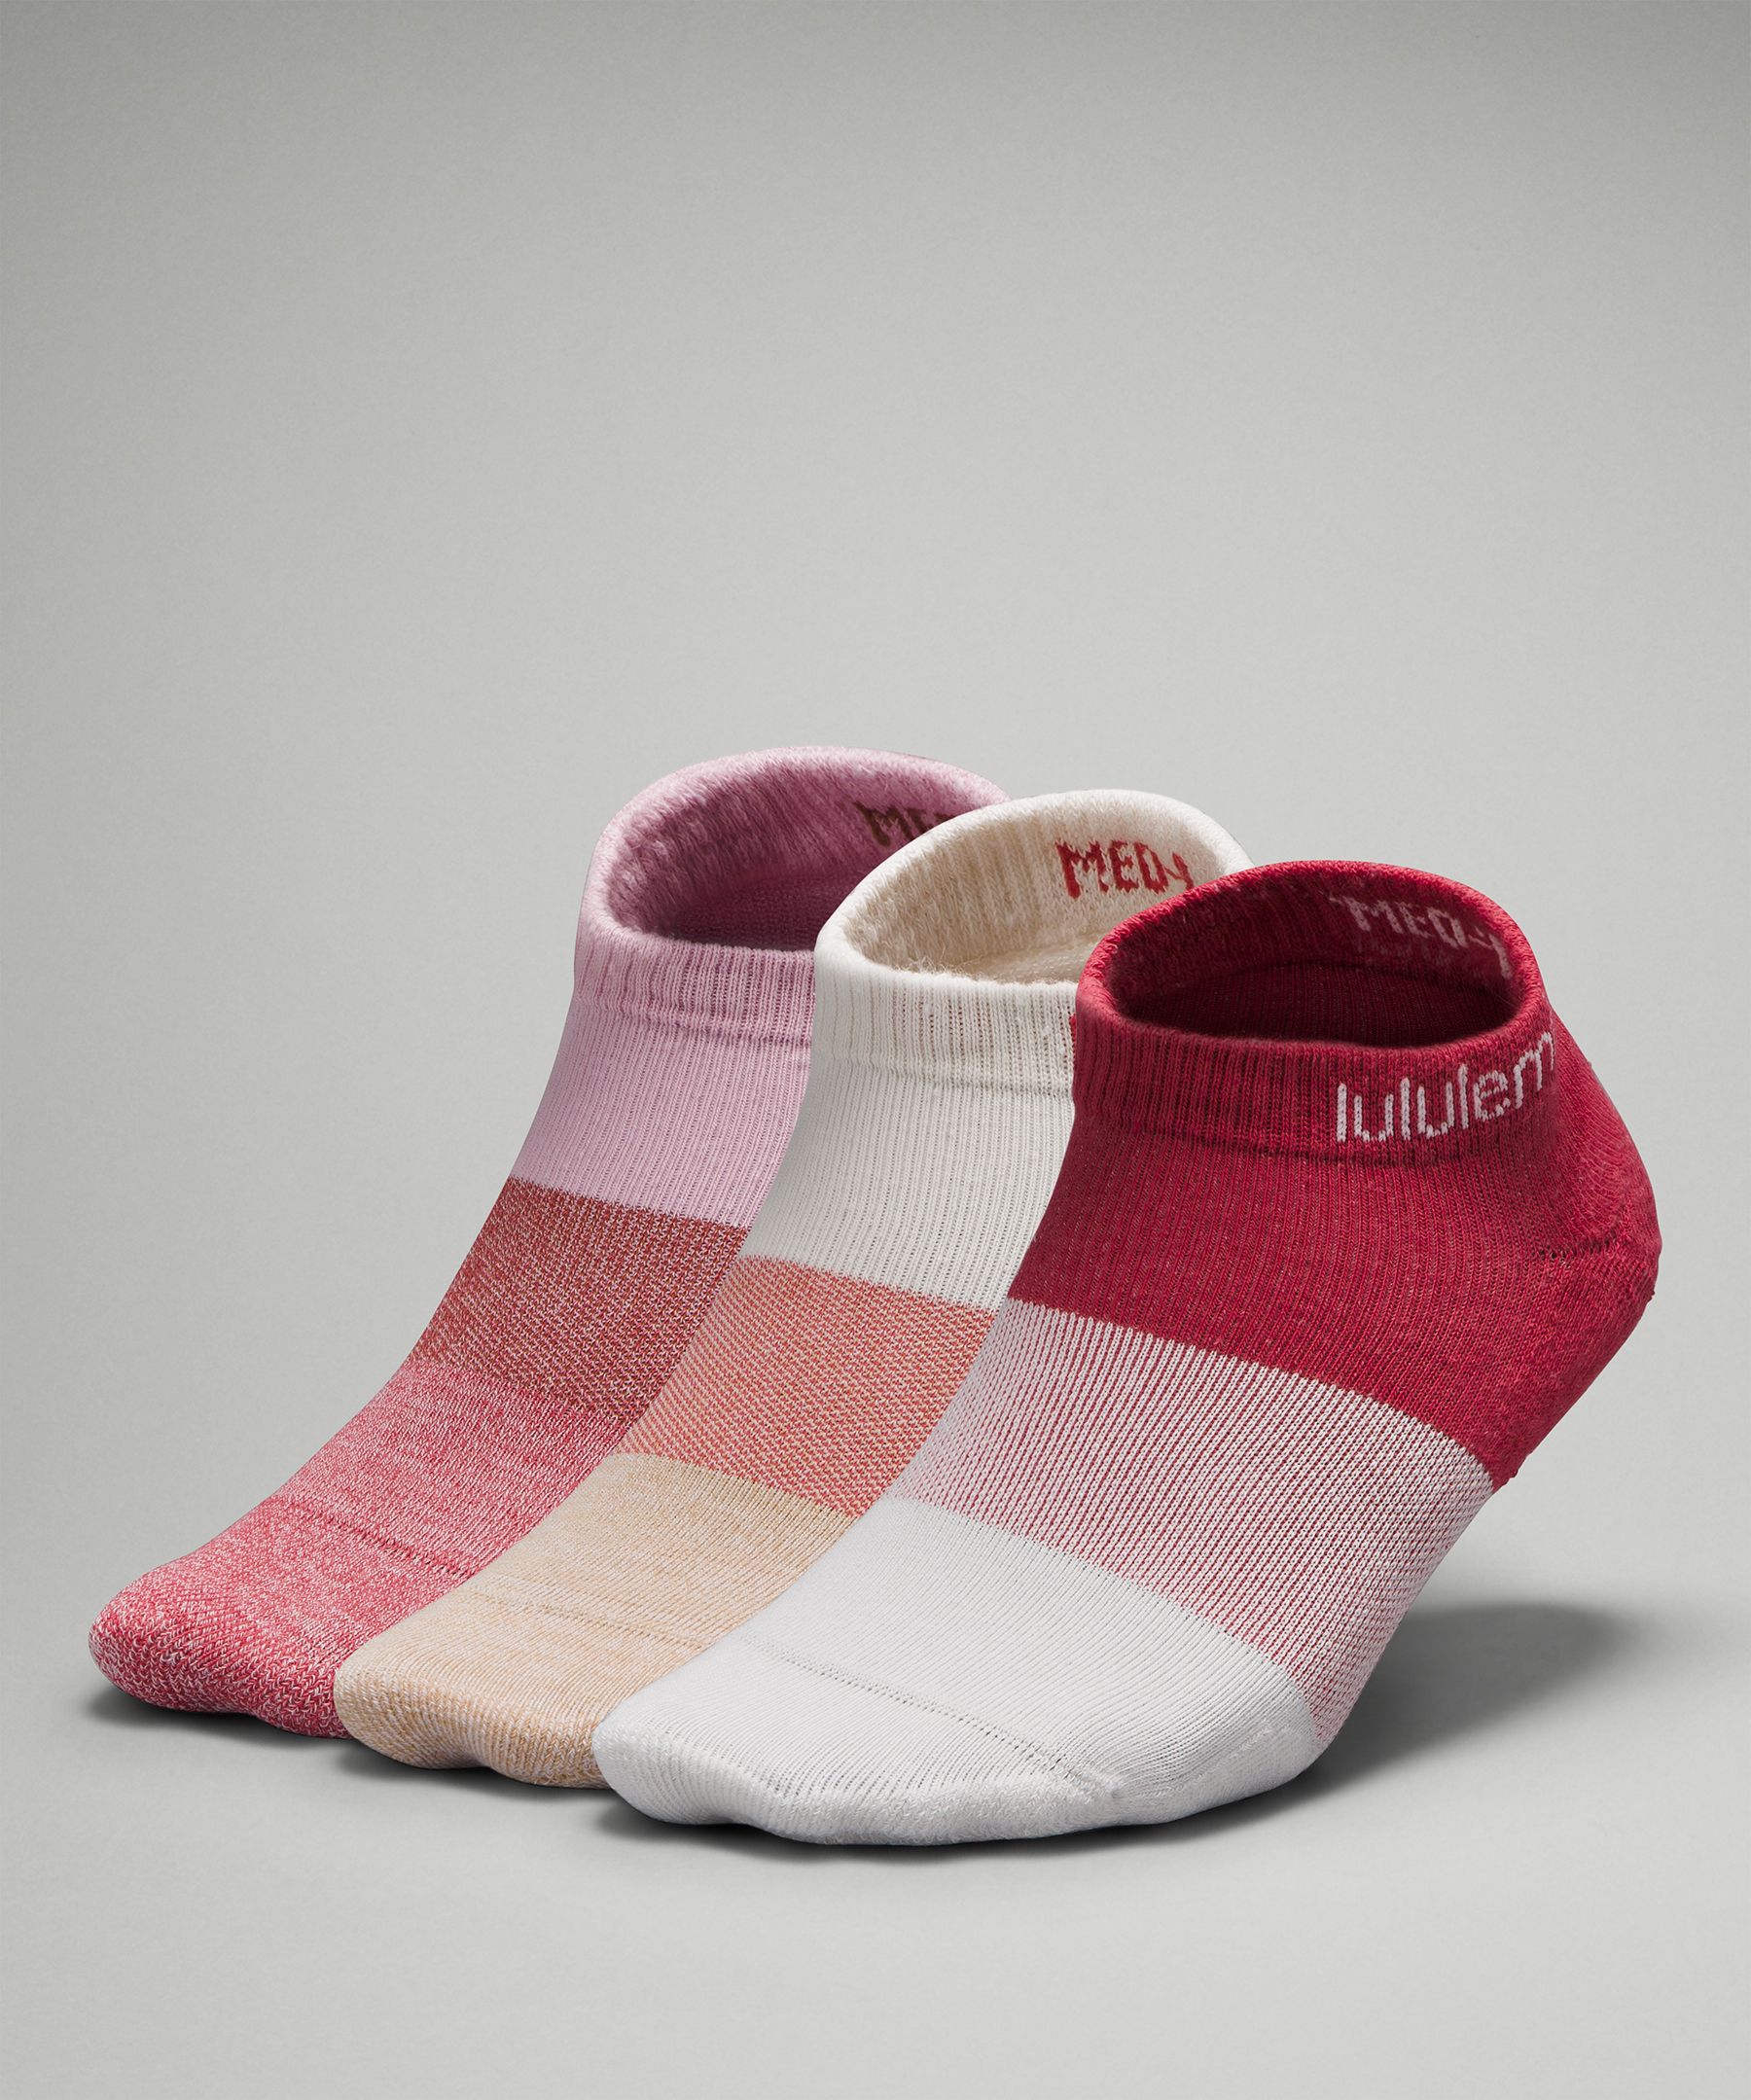 Women's Daily Stride Comfort Low-Ankle Socks *3 Pack, Women's Socks